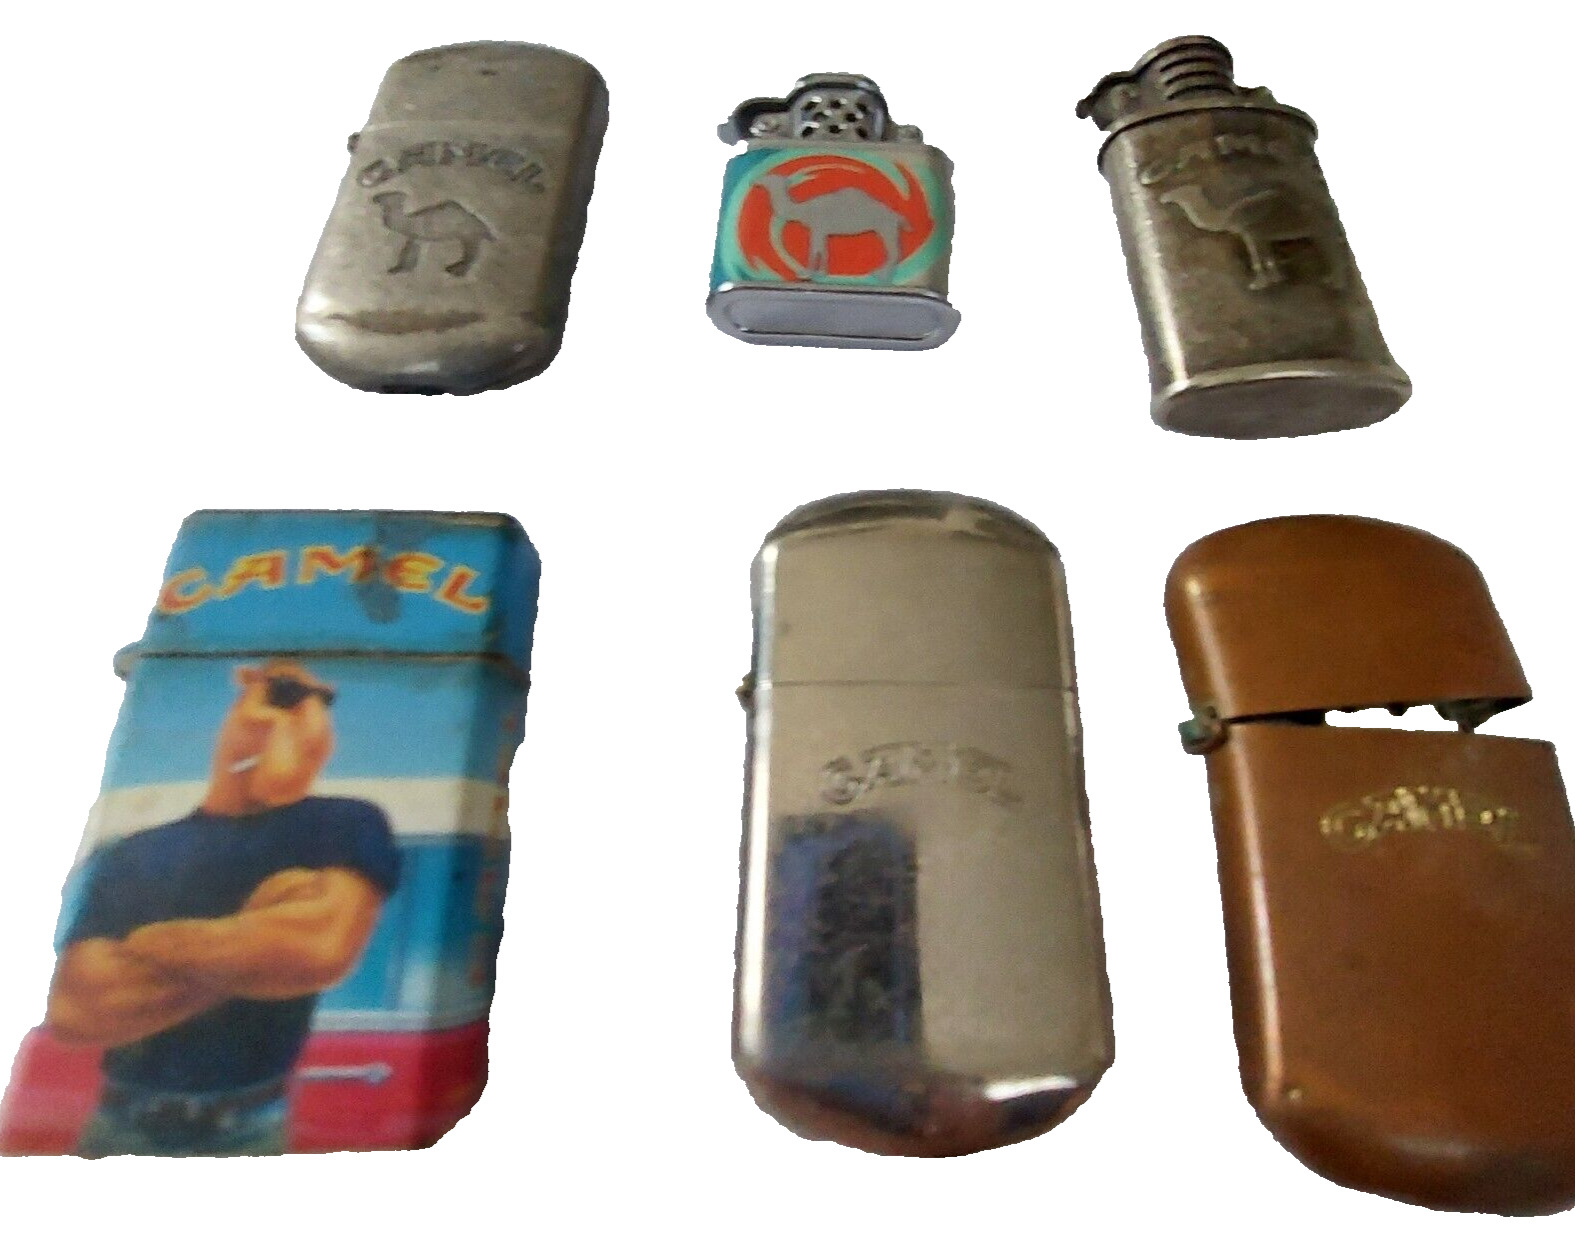 VTG Vintage 90s Lot of 6 Zippo Camel Lighters Pewter Brass Stainless Flip top